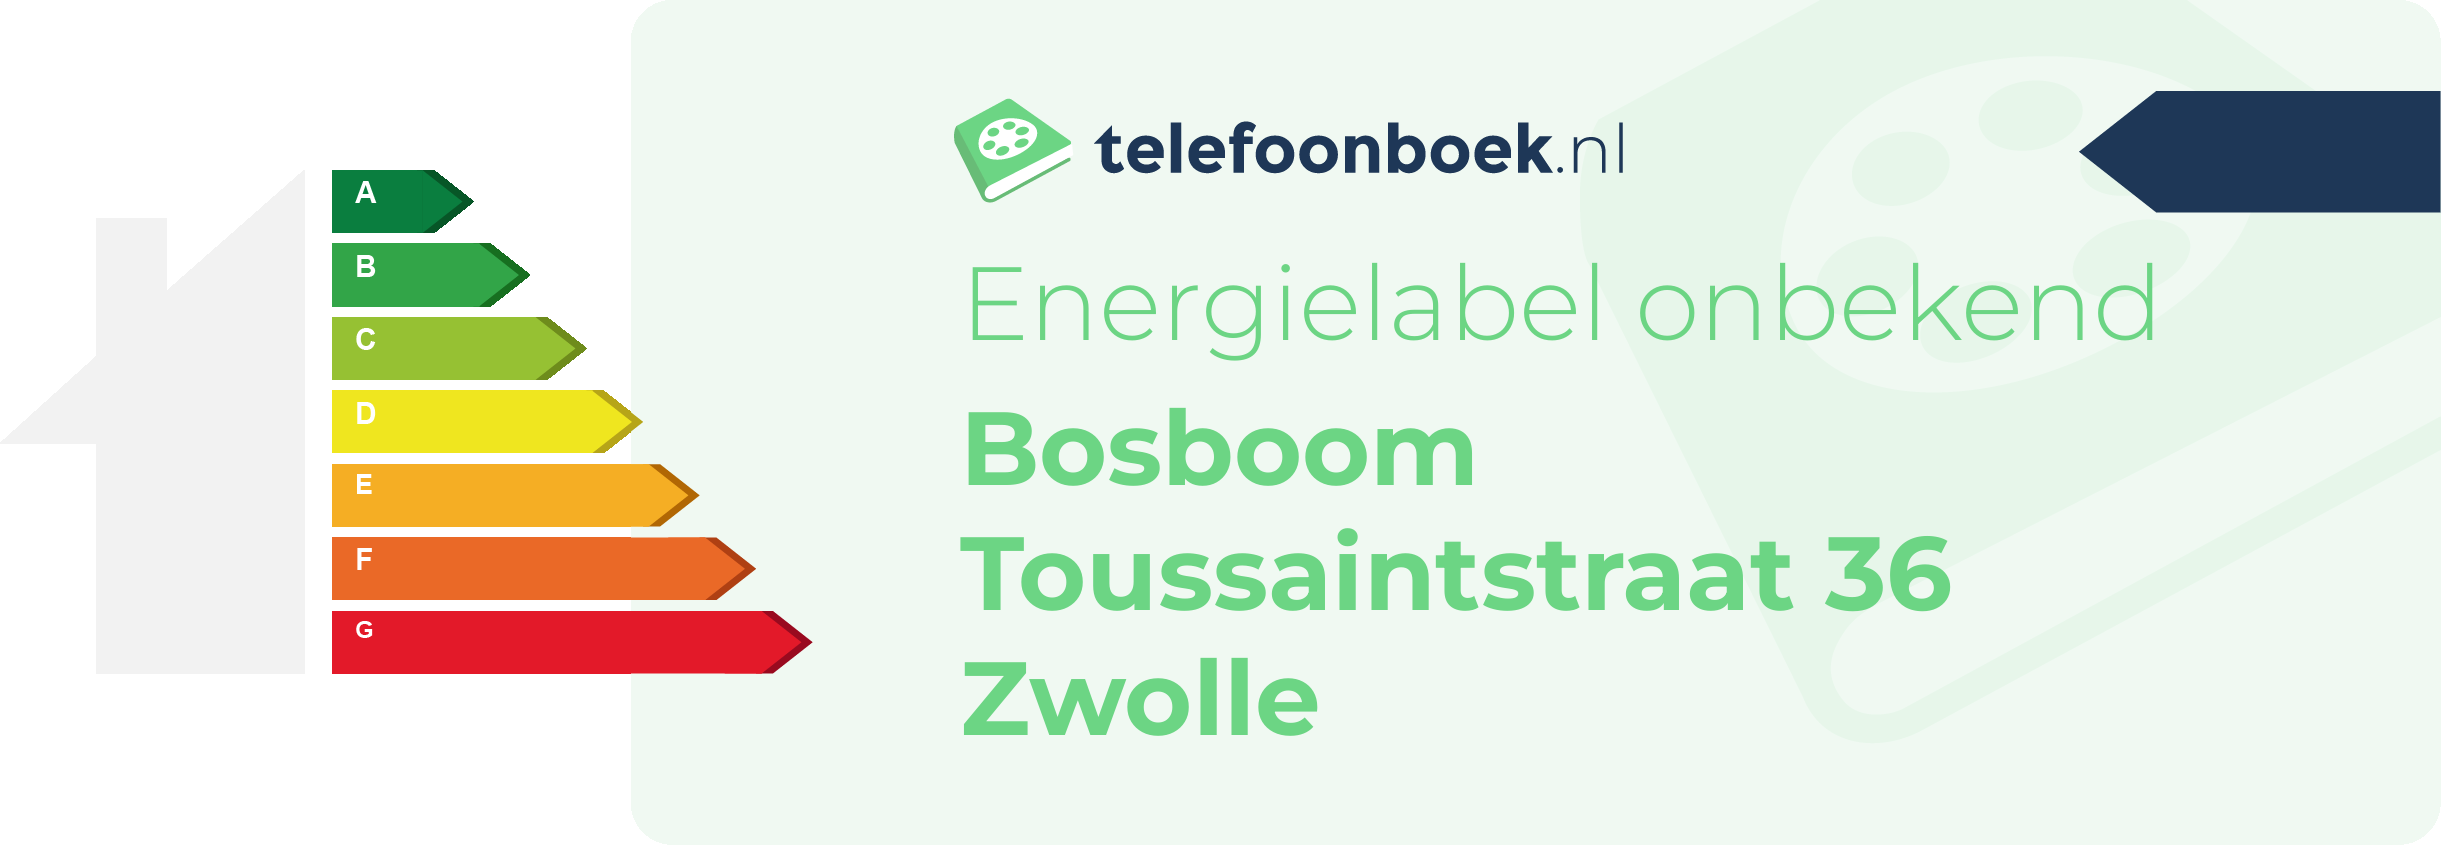 Energielabel Bosboom Toussaintstraat 36 Zwolle